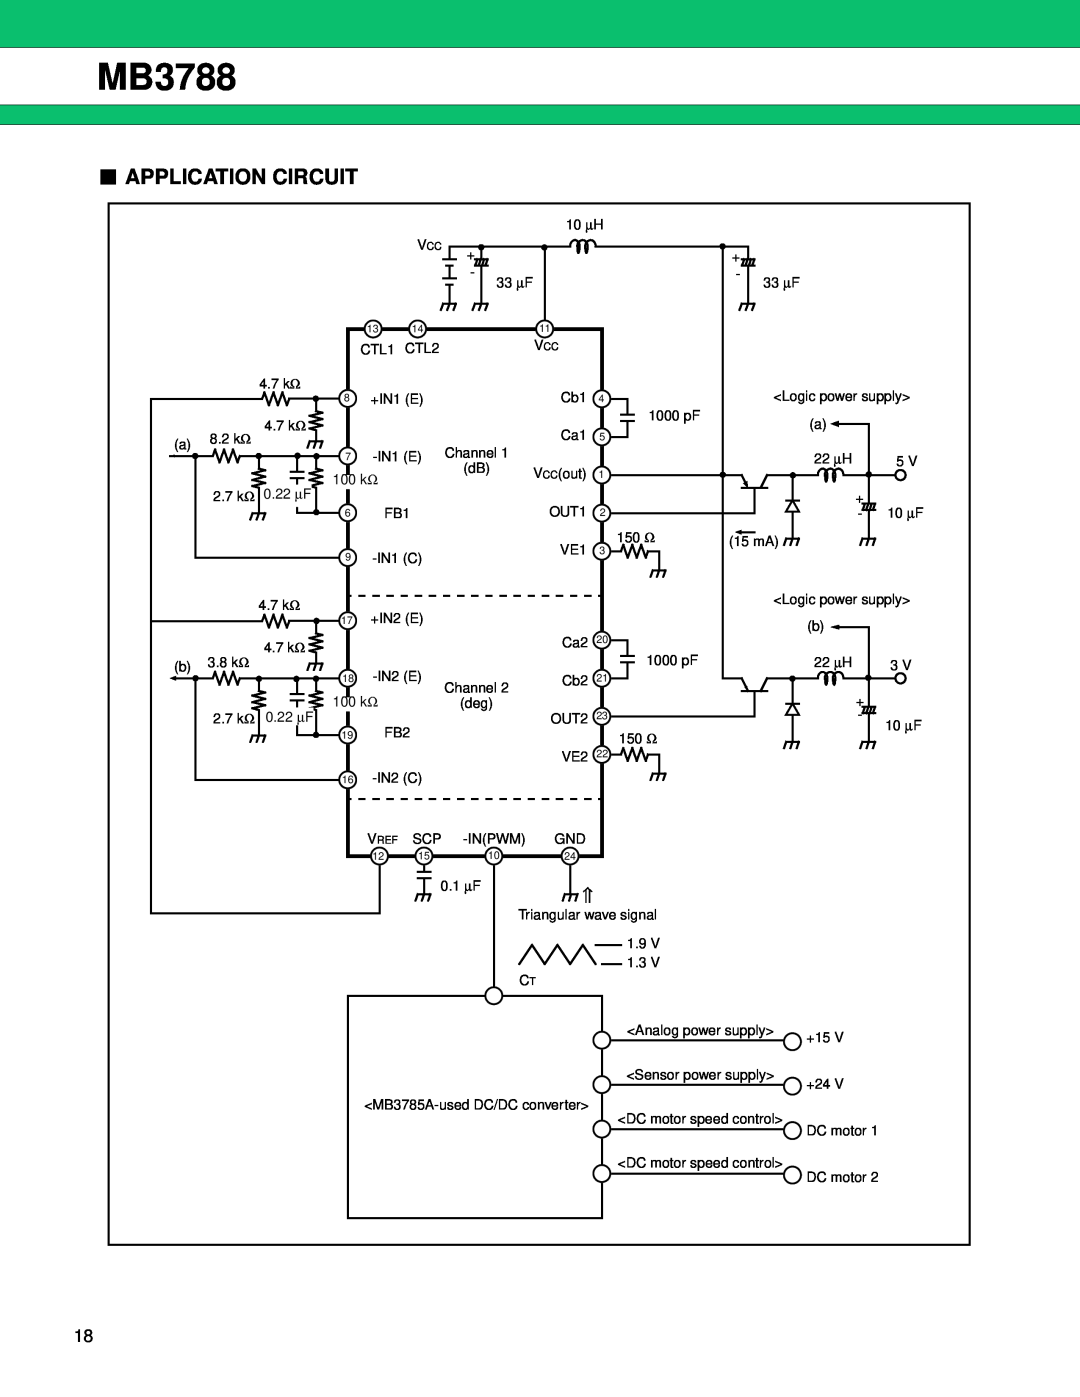 Fujitsu MB3788 manual Application Circuit 